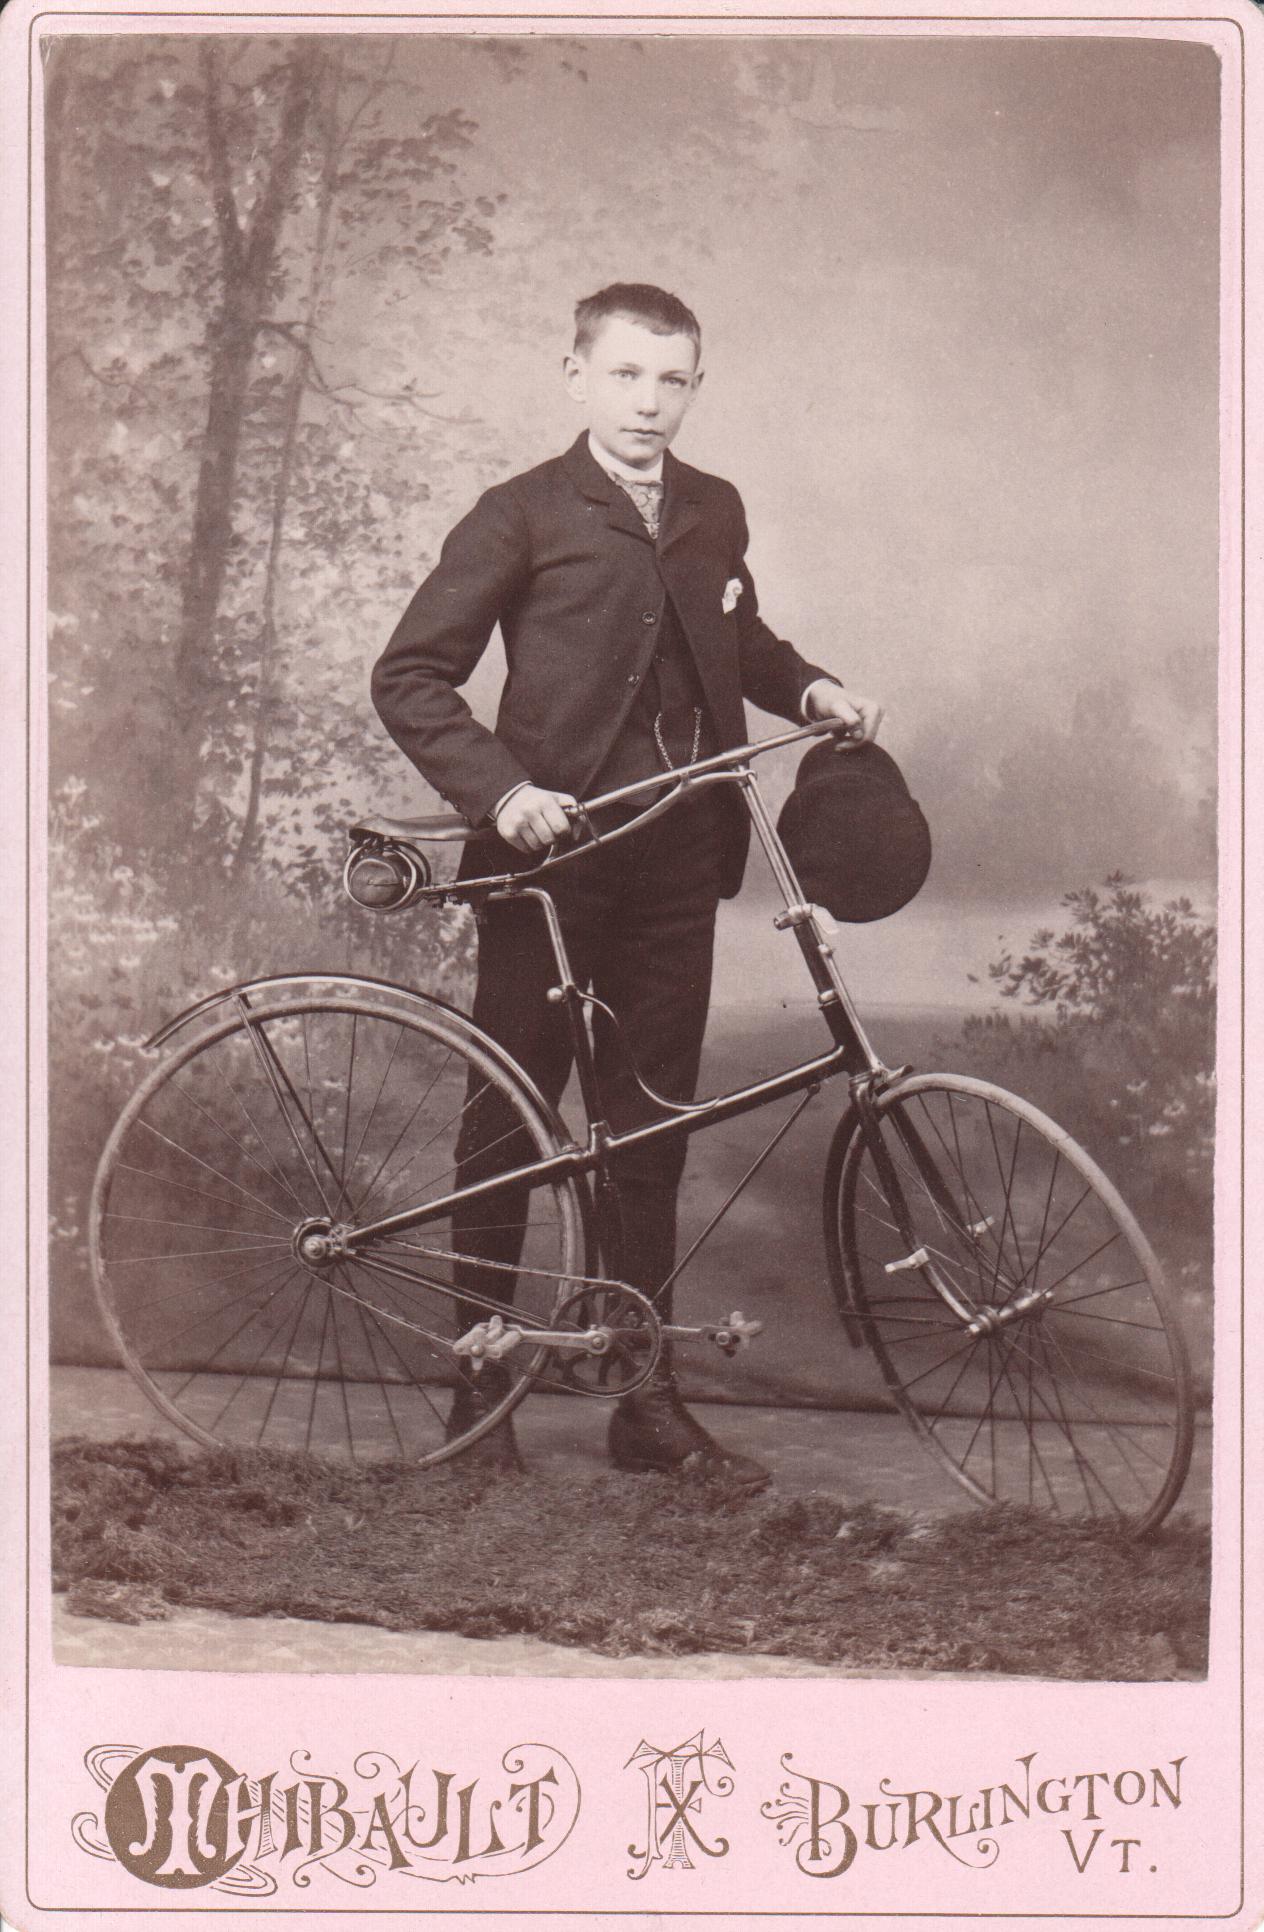 Boy with solid tire safety - Burlington Vt. - Circa 1890